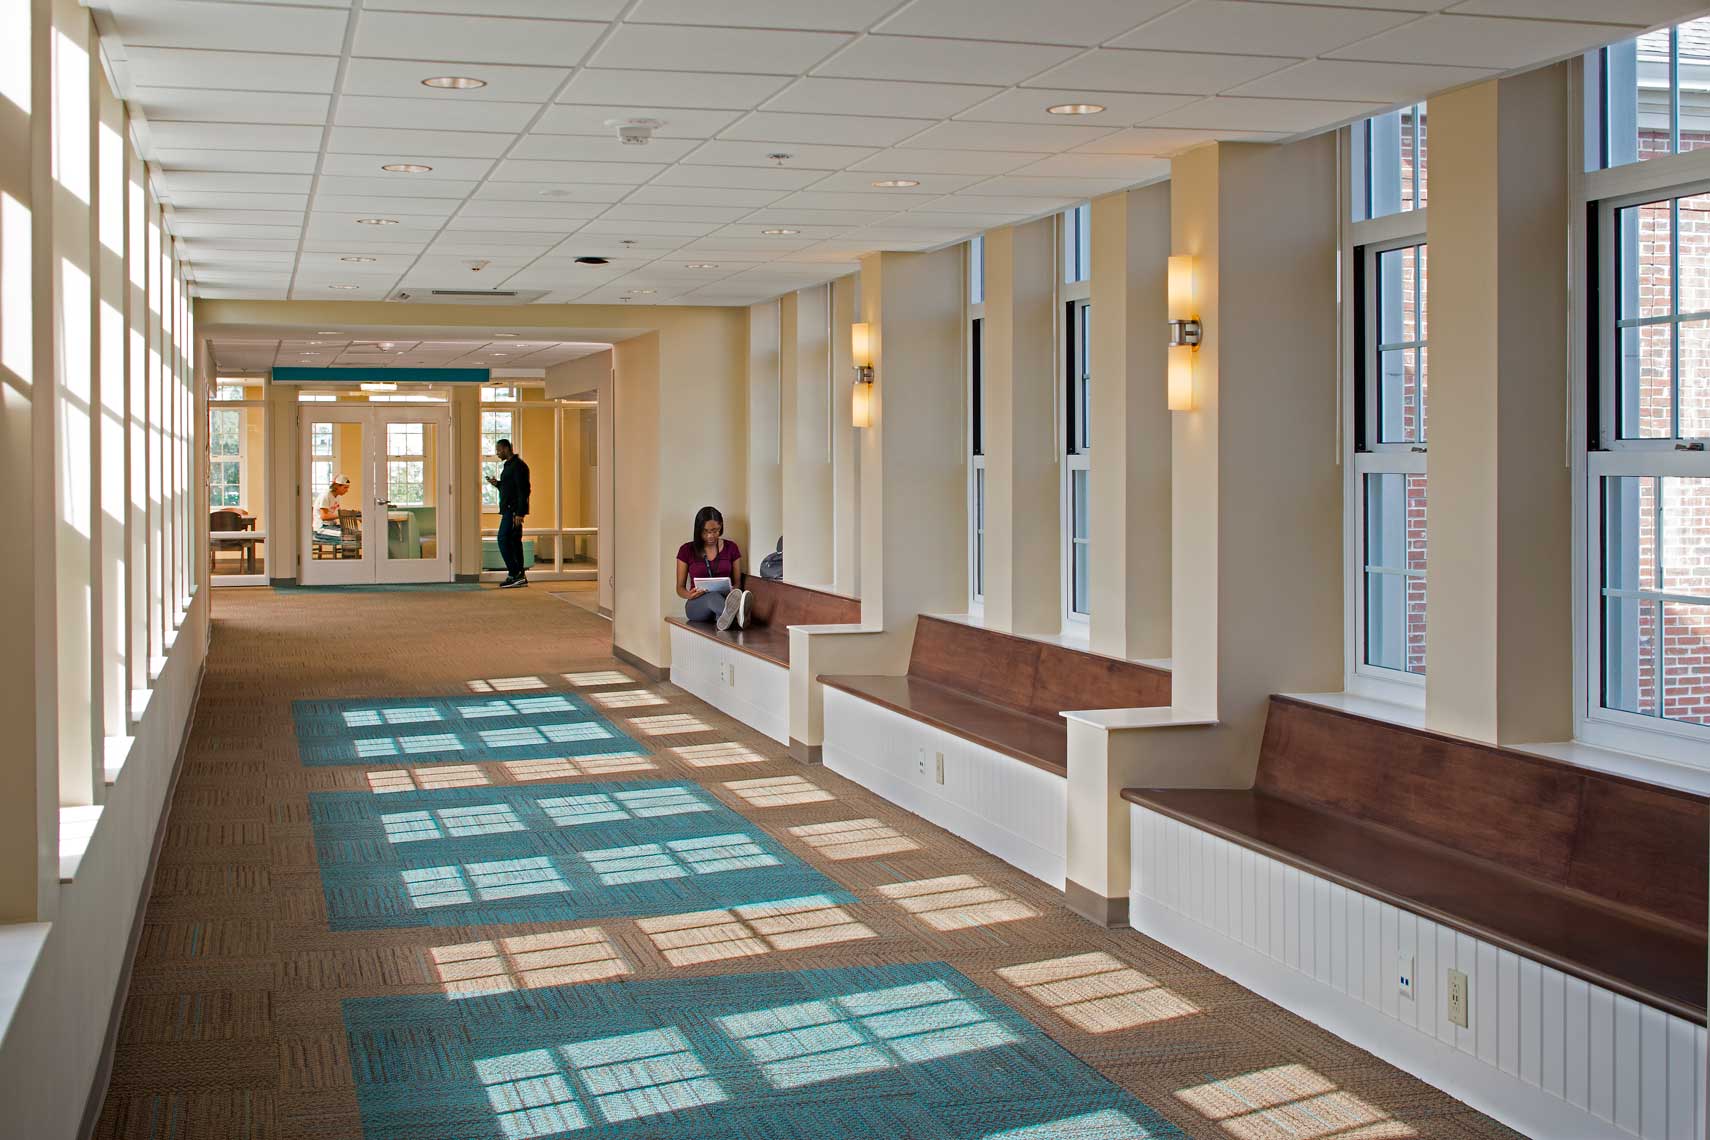 An interior view of the hallway at Coastal Carolina University’s Student Housing